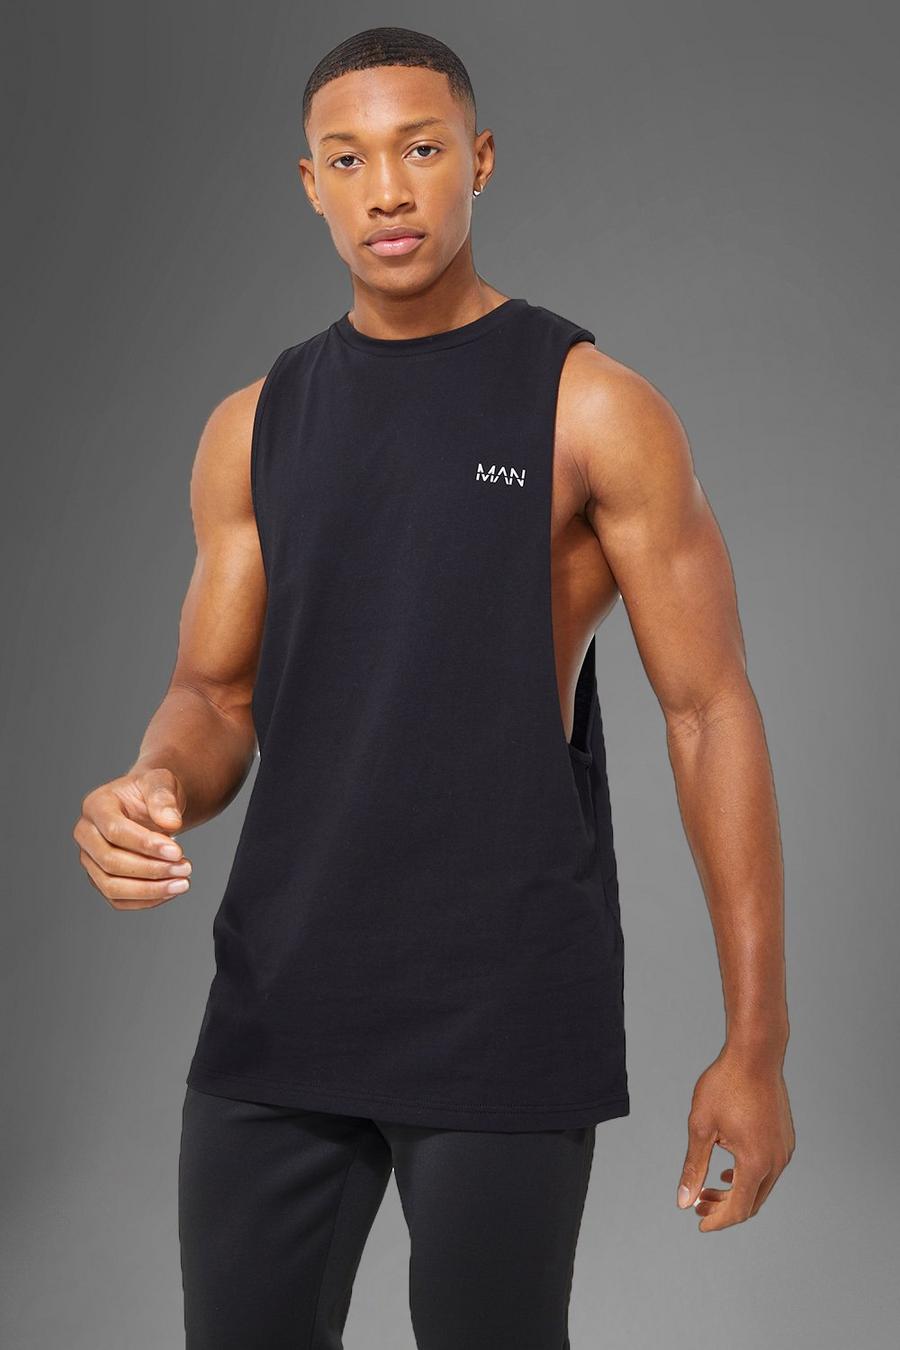 Gym Bodybuilding Tank Top & Slim Fit Sport Shorts Suit Muscle Workout Fitness Sleeveless Vest 2 PCS Men Outfits 